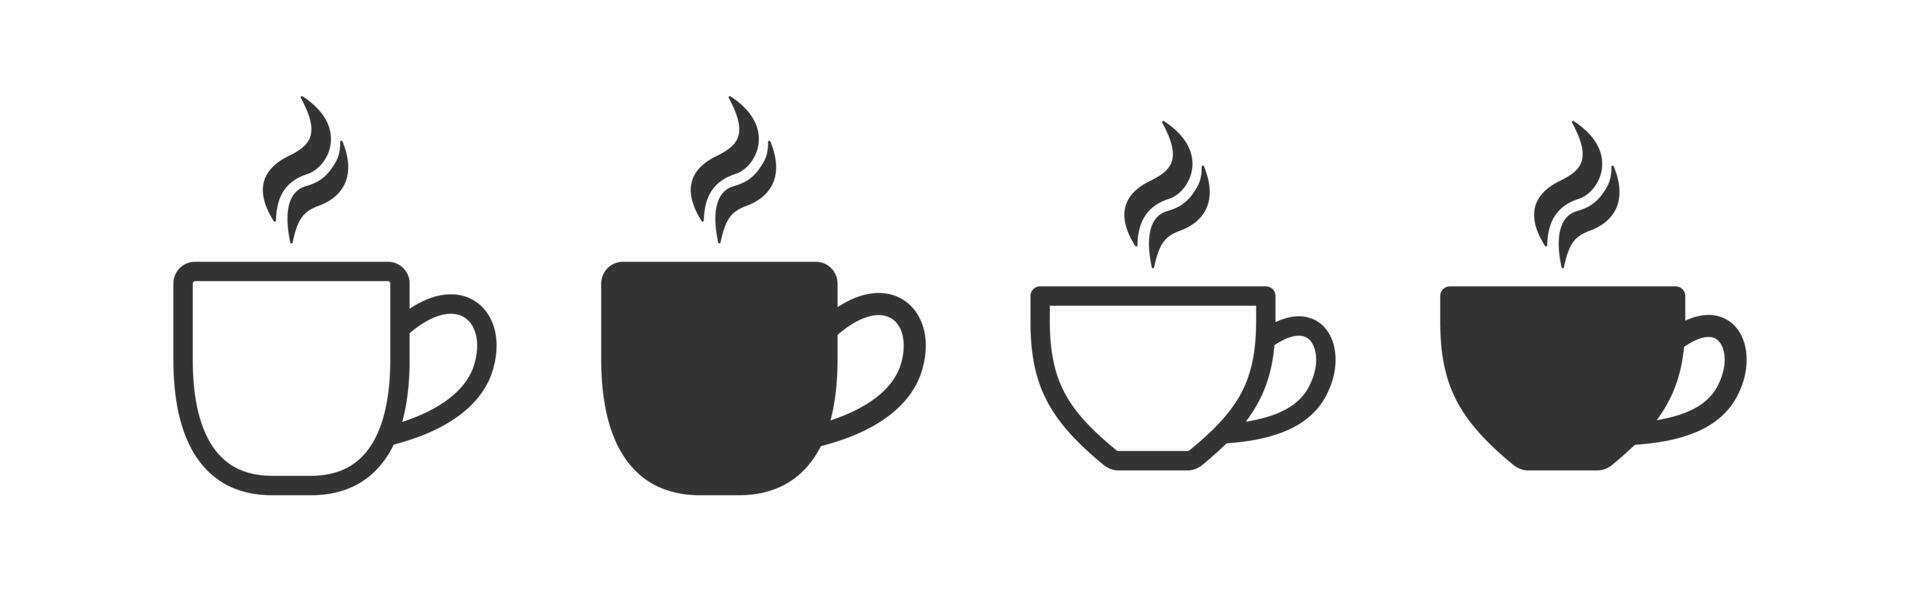 café, té taza icono. caliente jarra de bebida. Café exprés, capuchino, latté, moca bebida desayuno. vector